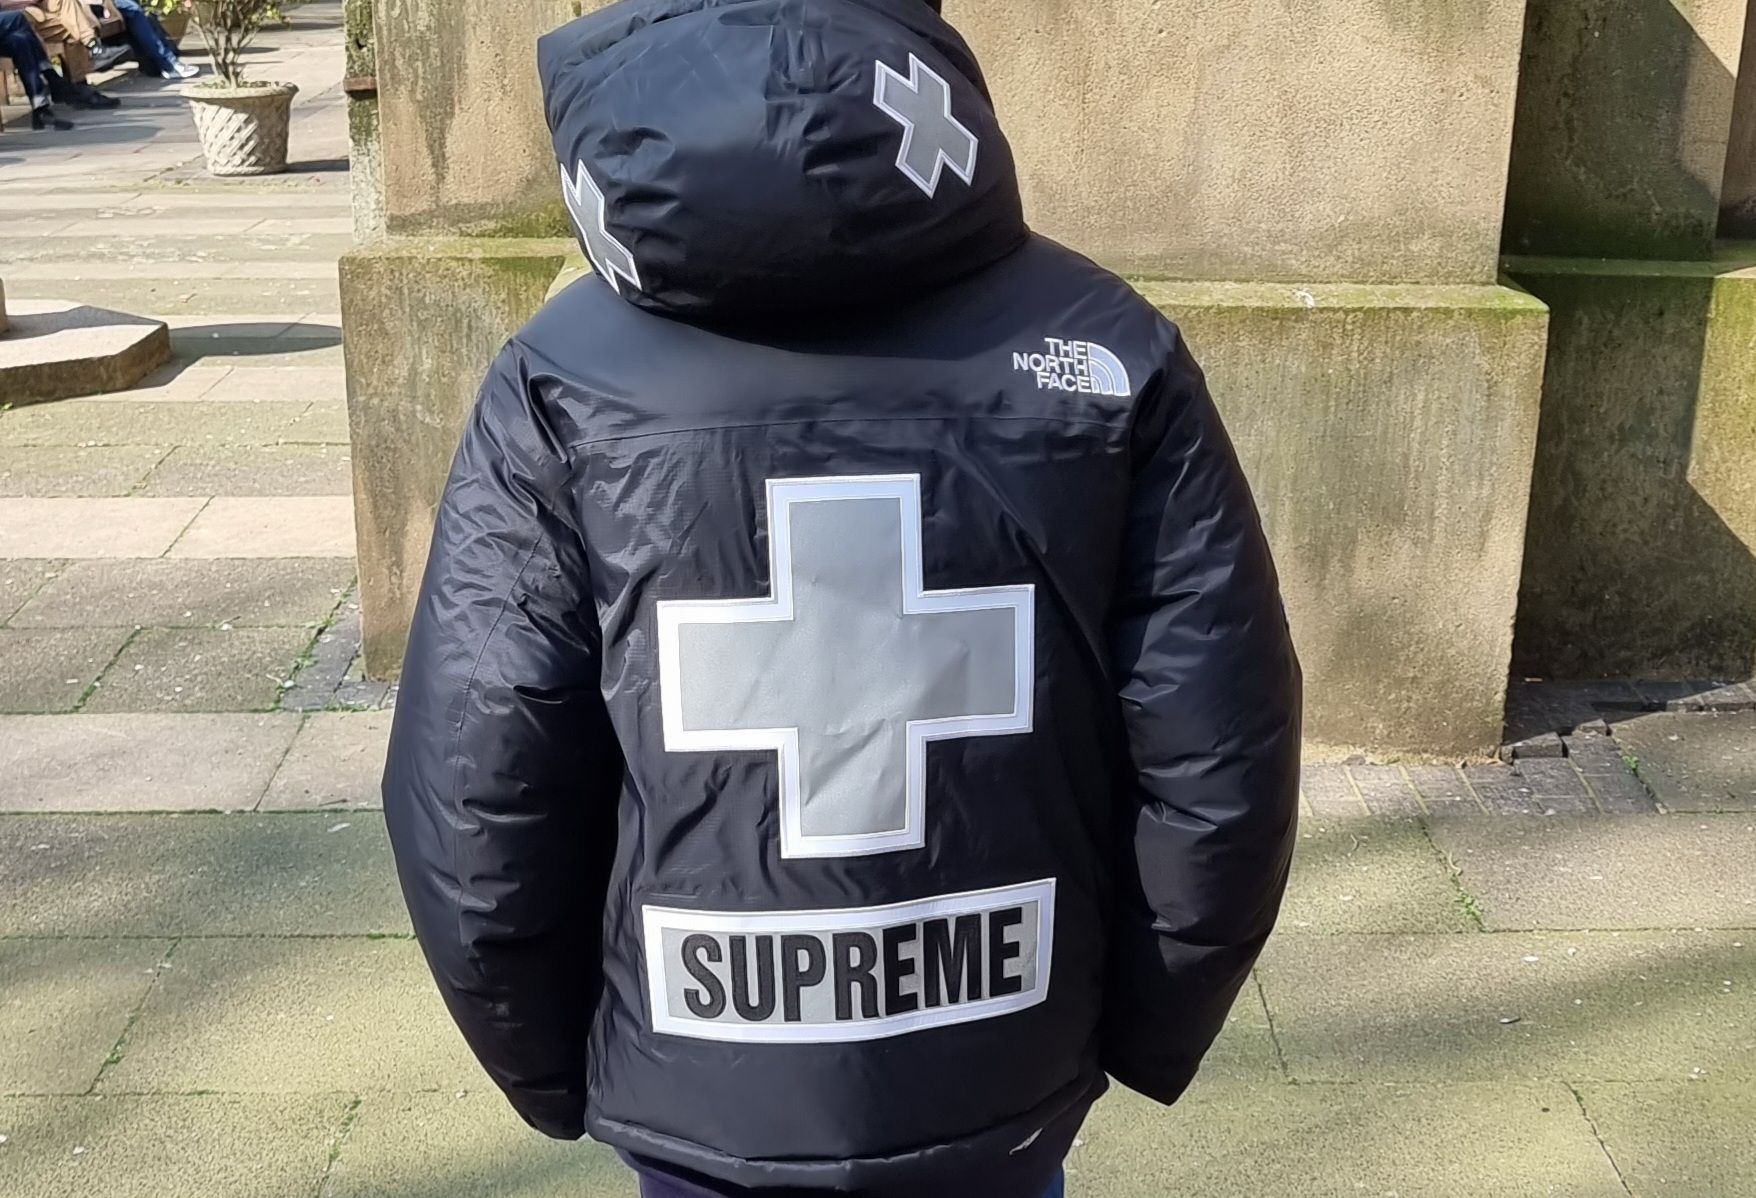 Supreme x The North Face Faux Fur Jacket - Black